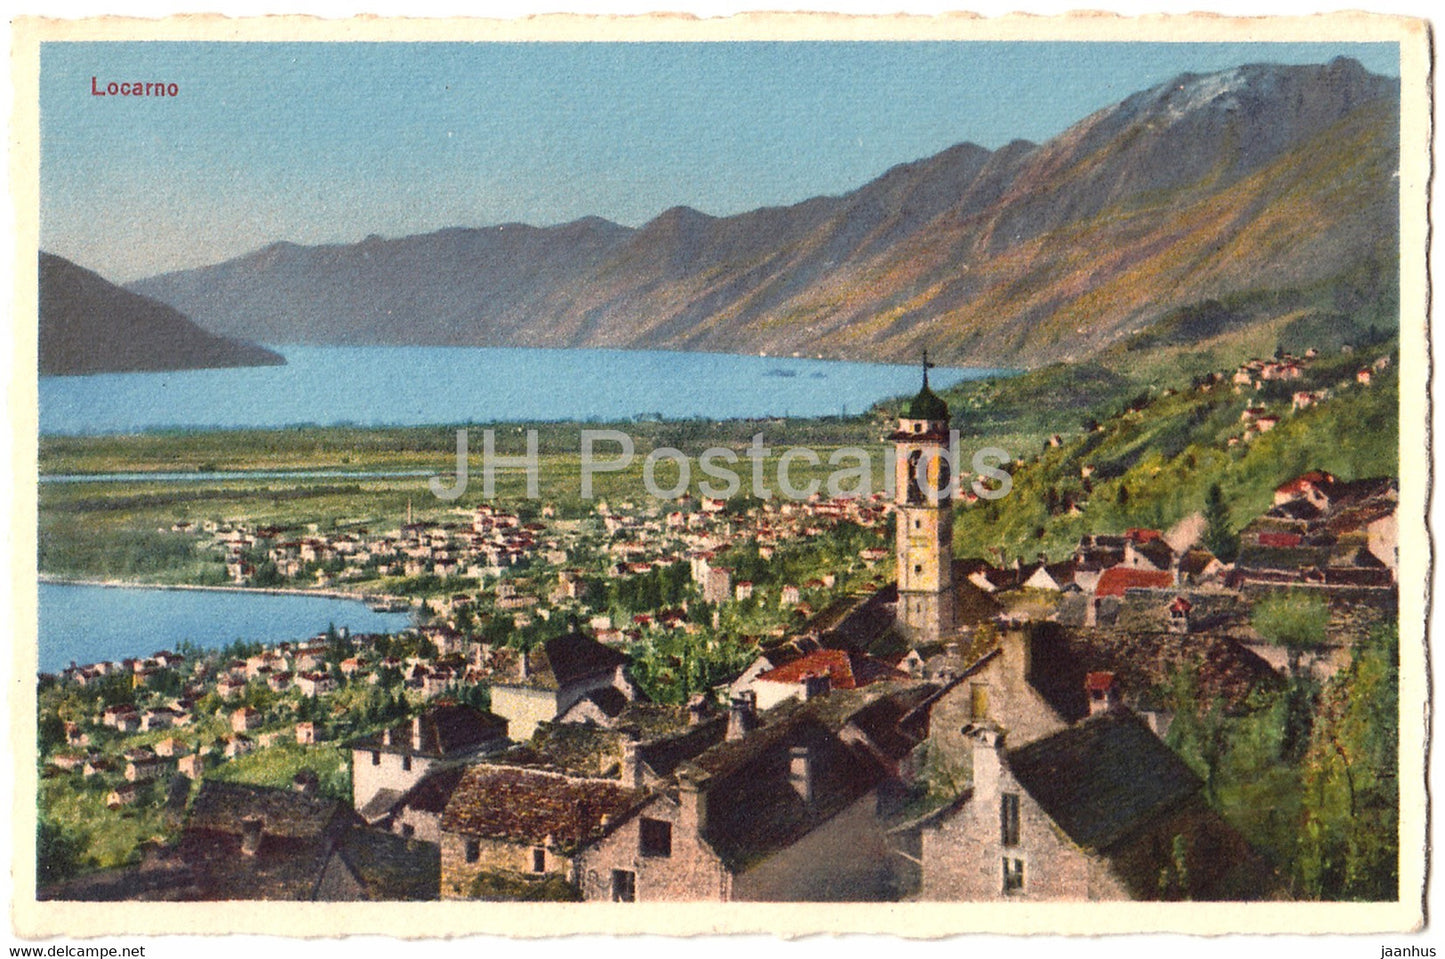 Locarno - 8580 - old postcard - Switzerland - unused - JH Postcards